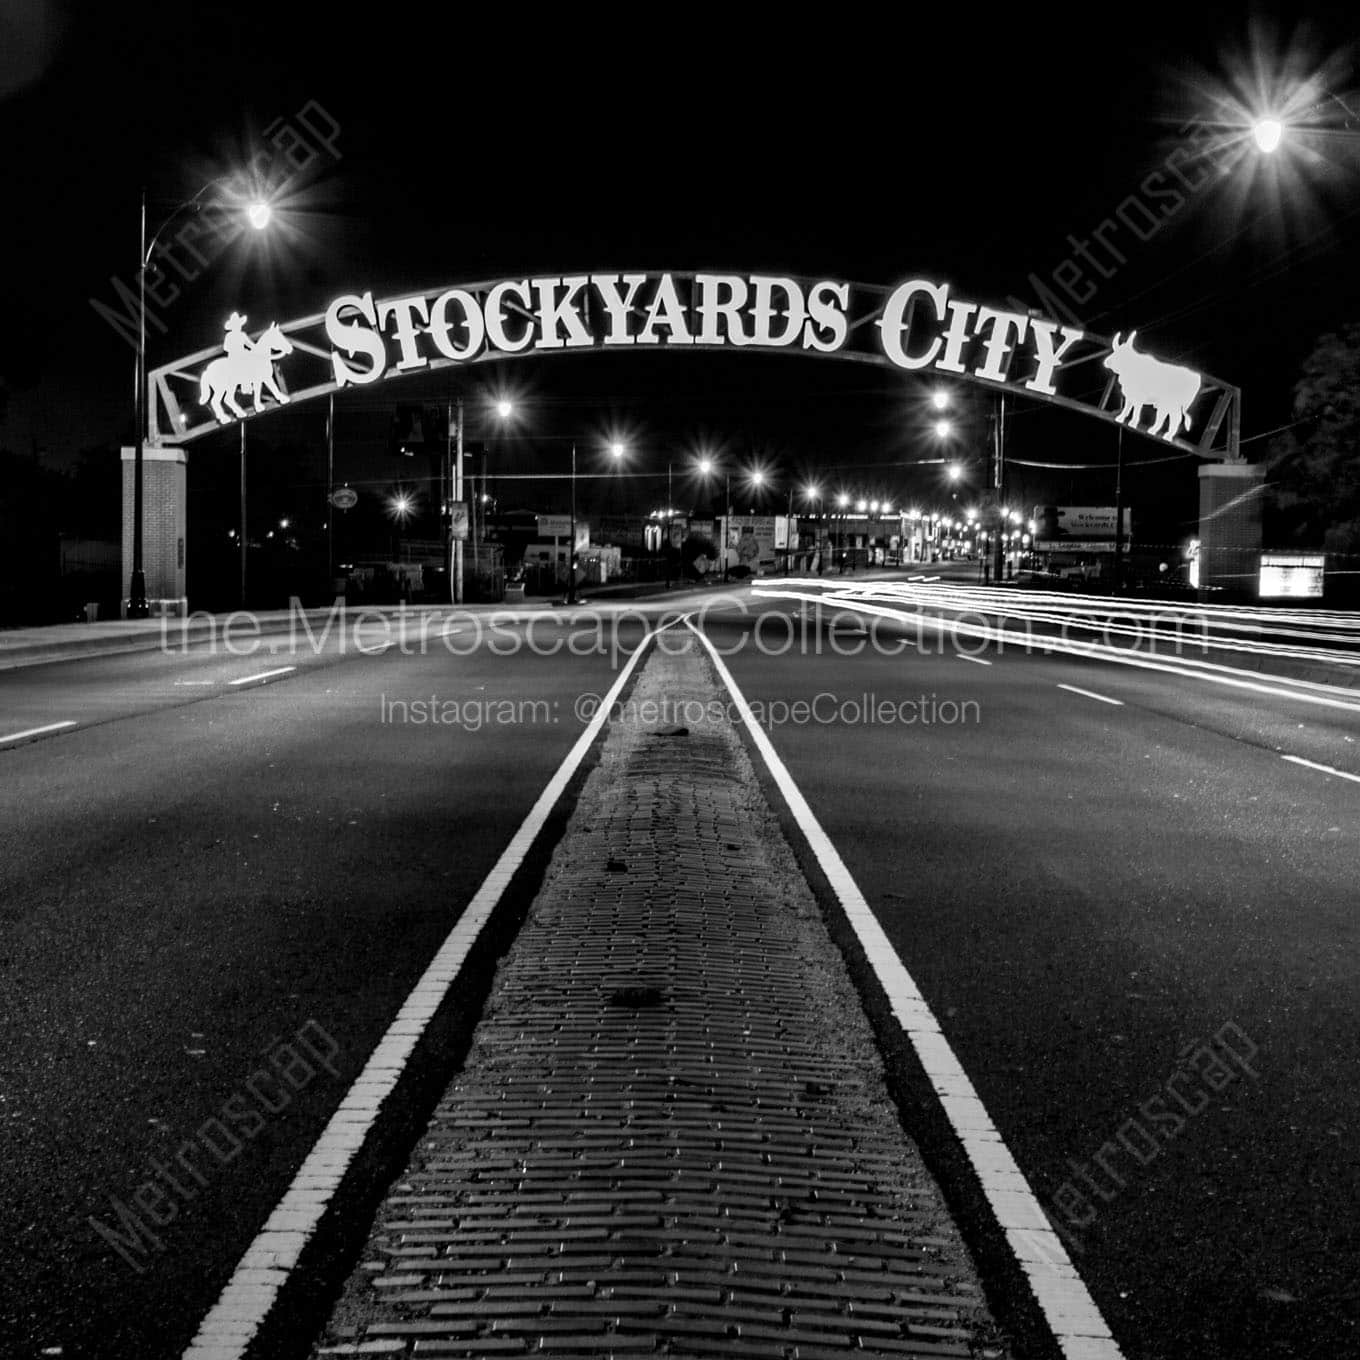 okc stockyards city at night Black & White Wall Art